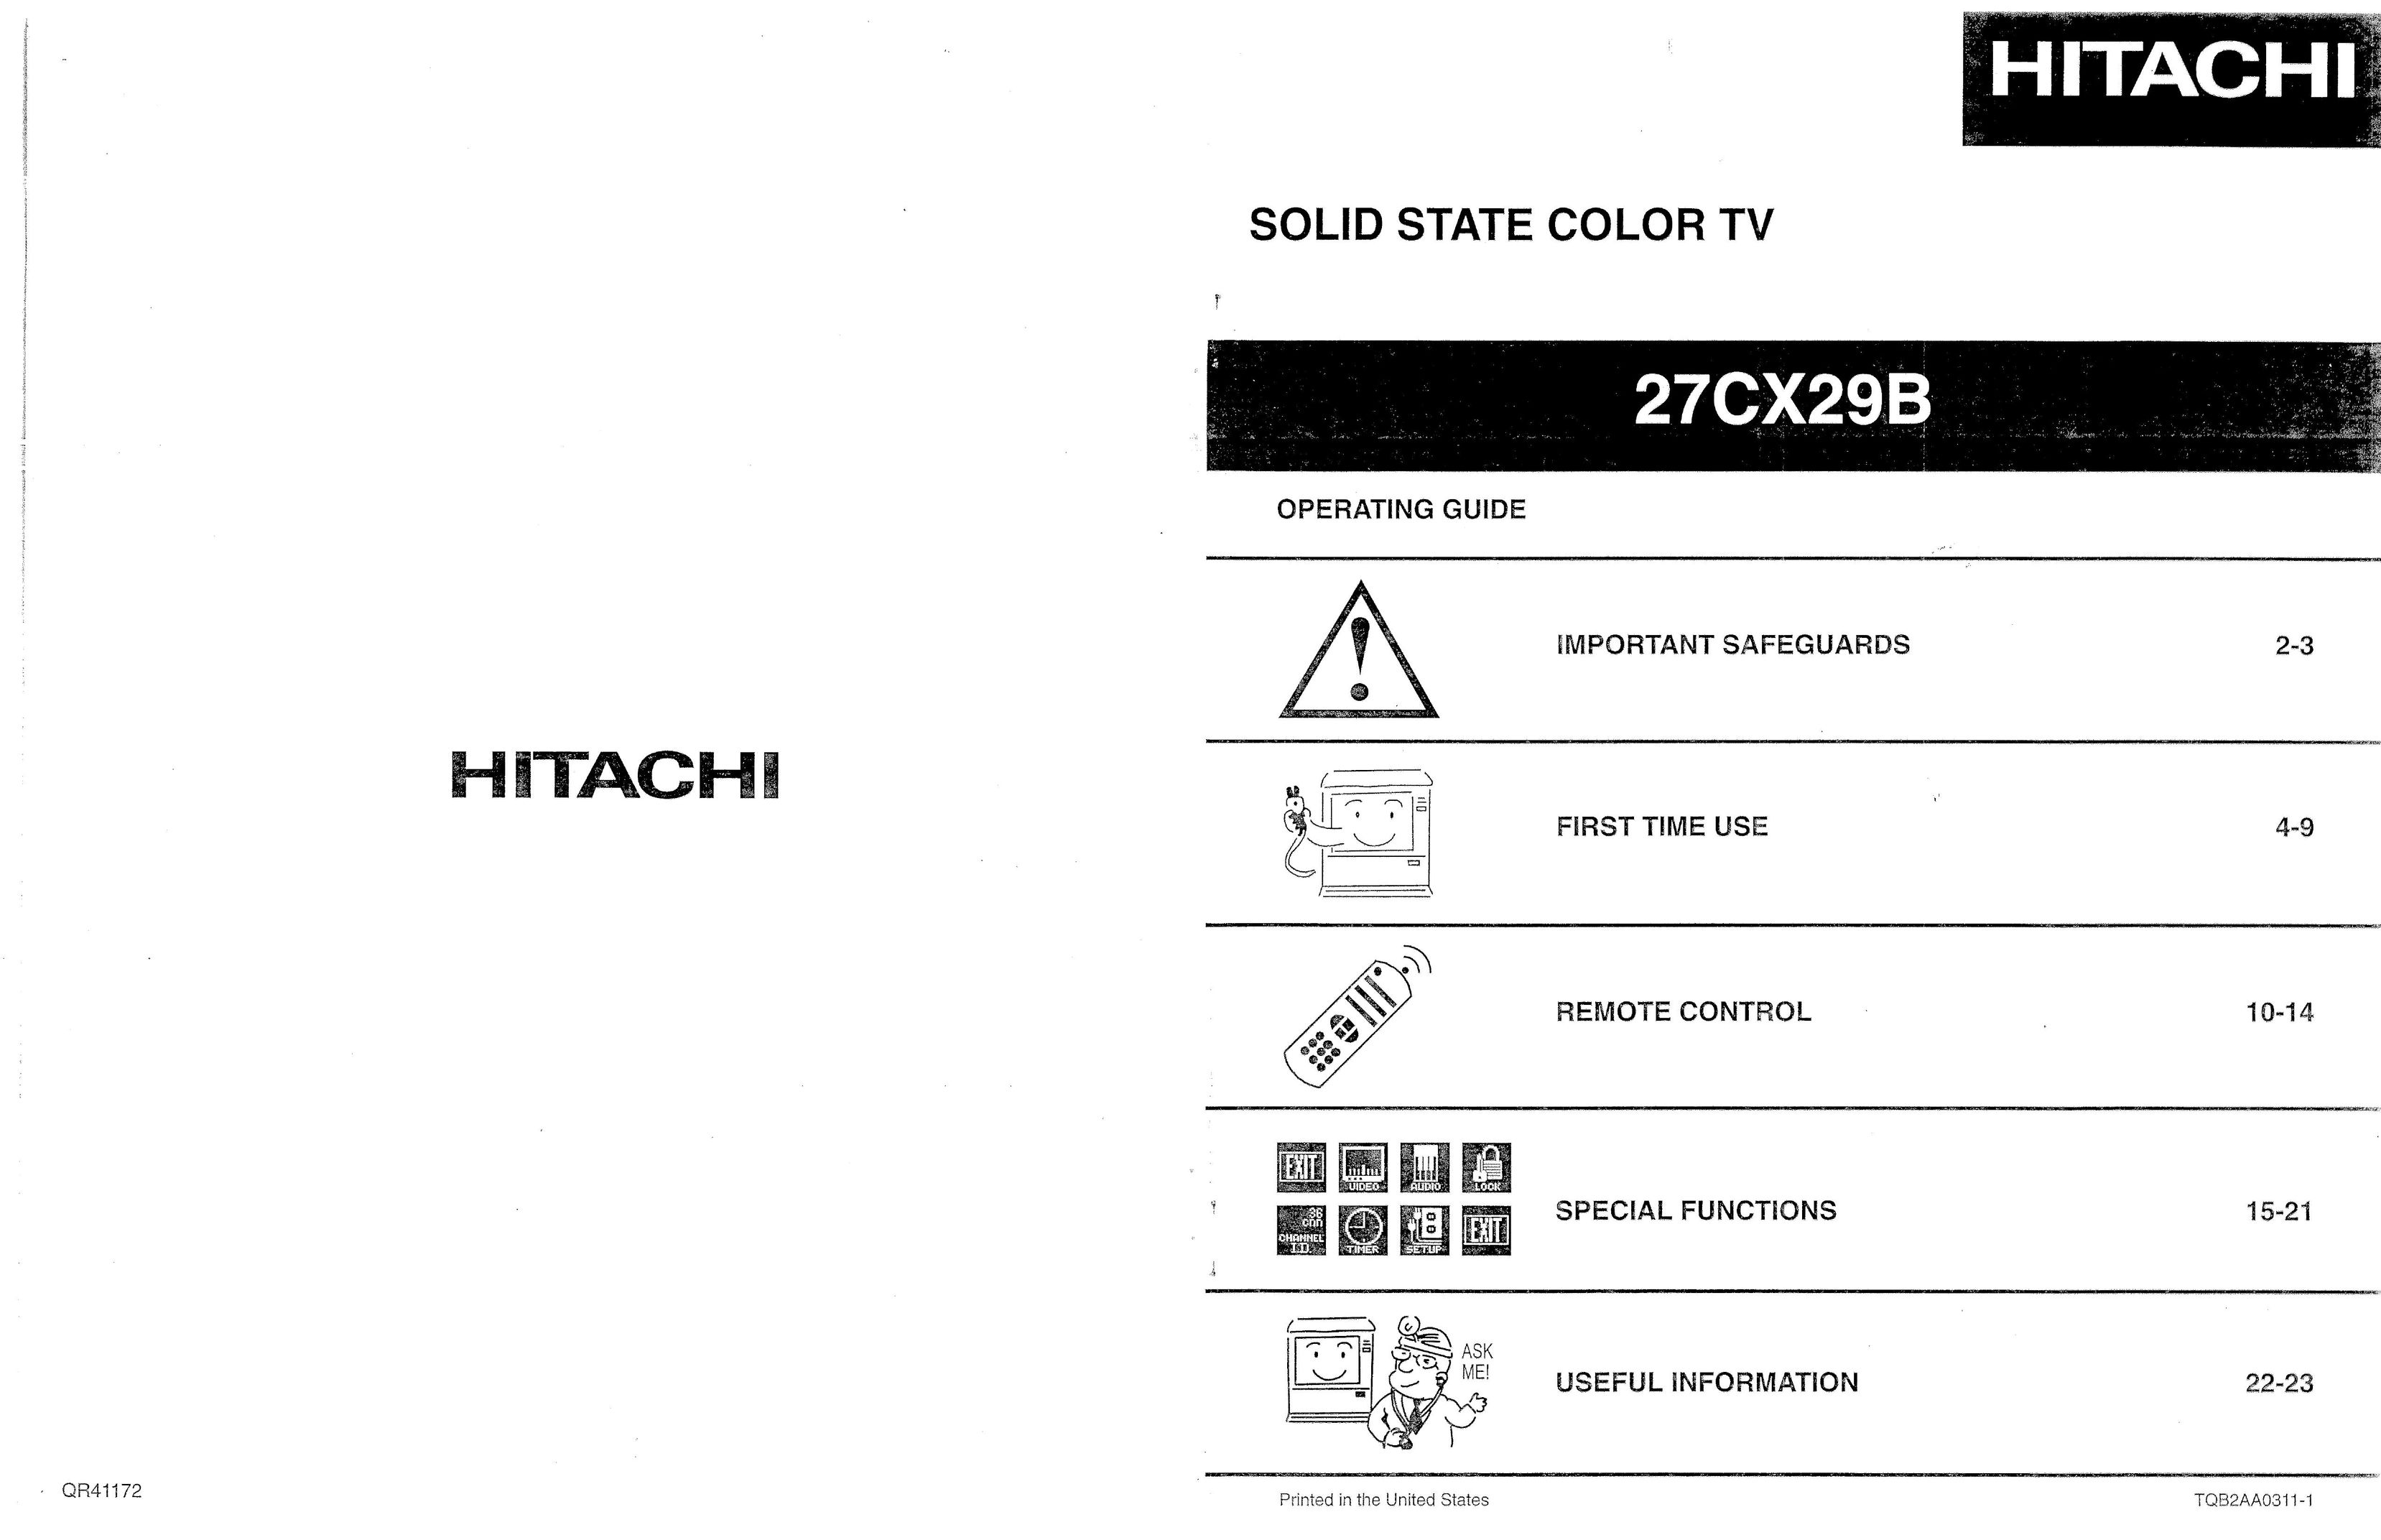 Hitachi 27CX29B CRT Television User Manual